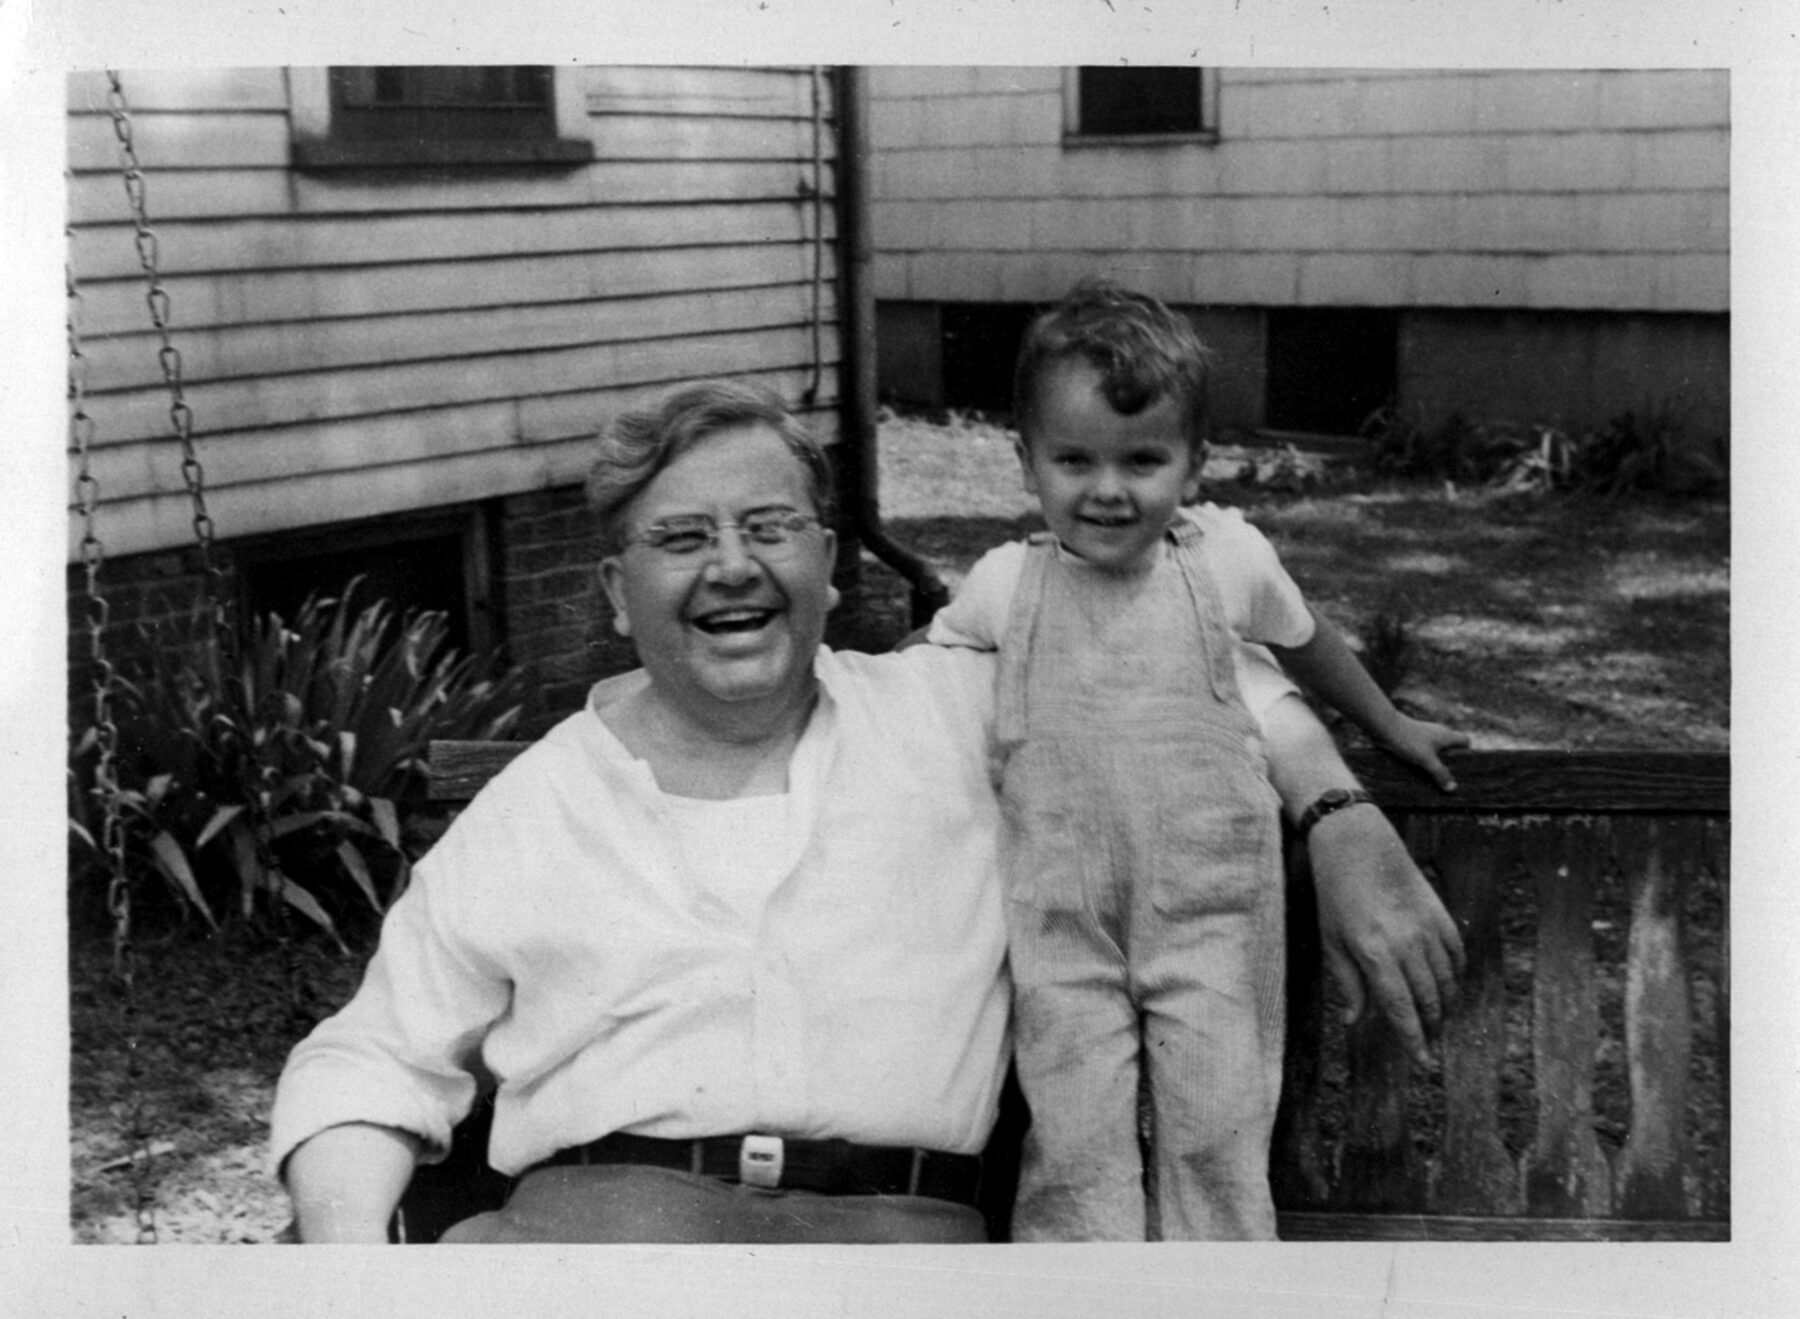 Reuben Soderstrom with his grandson, Carl Soderstrom, Jr.